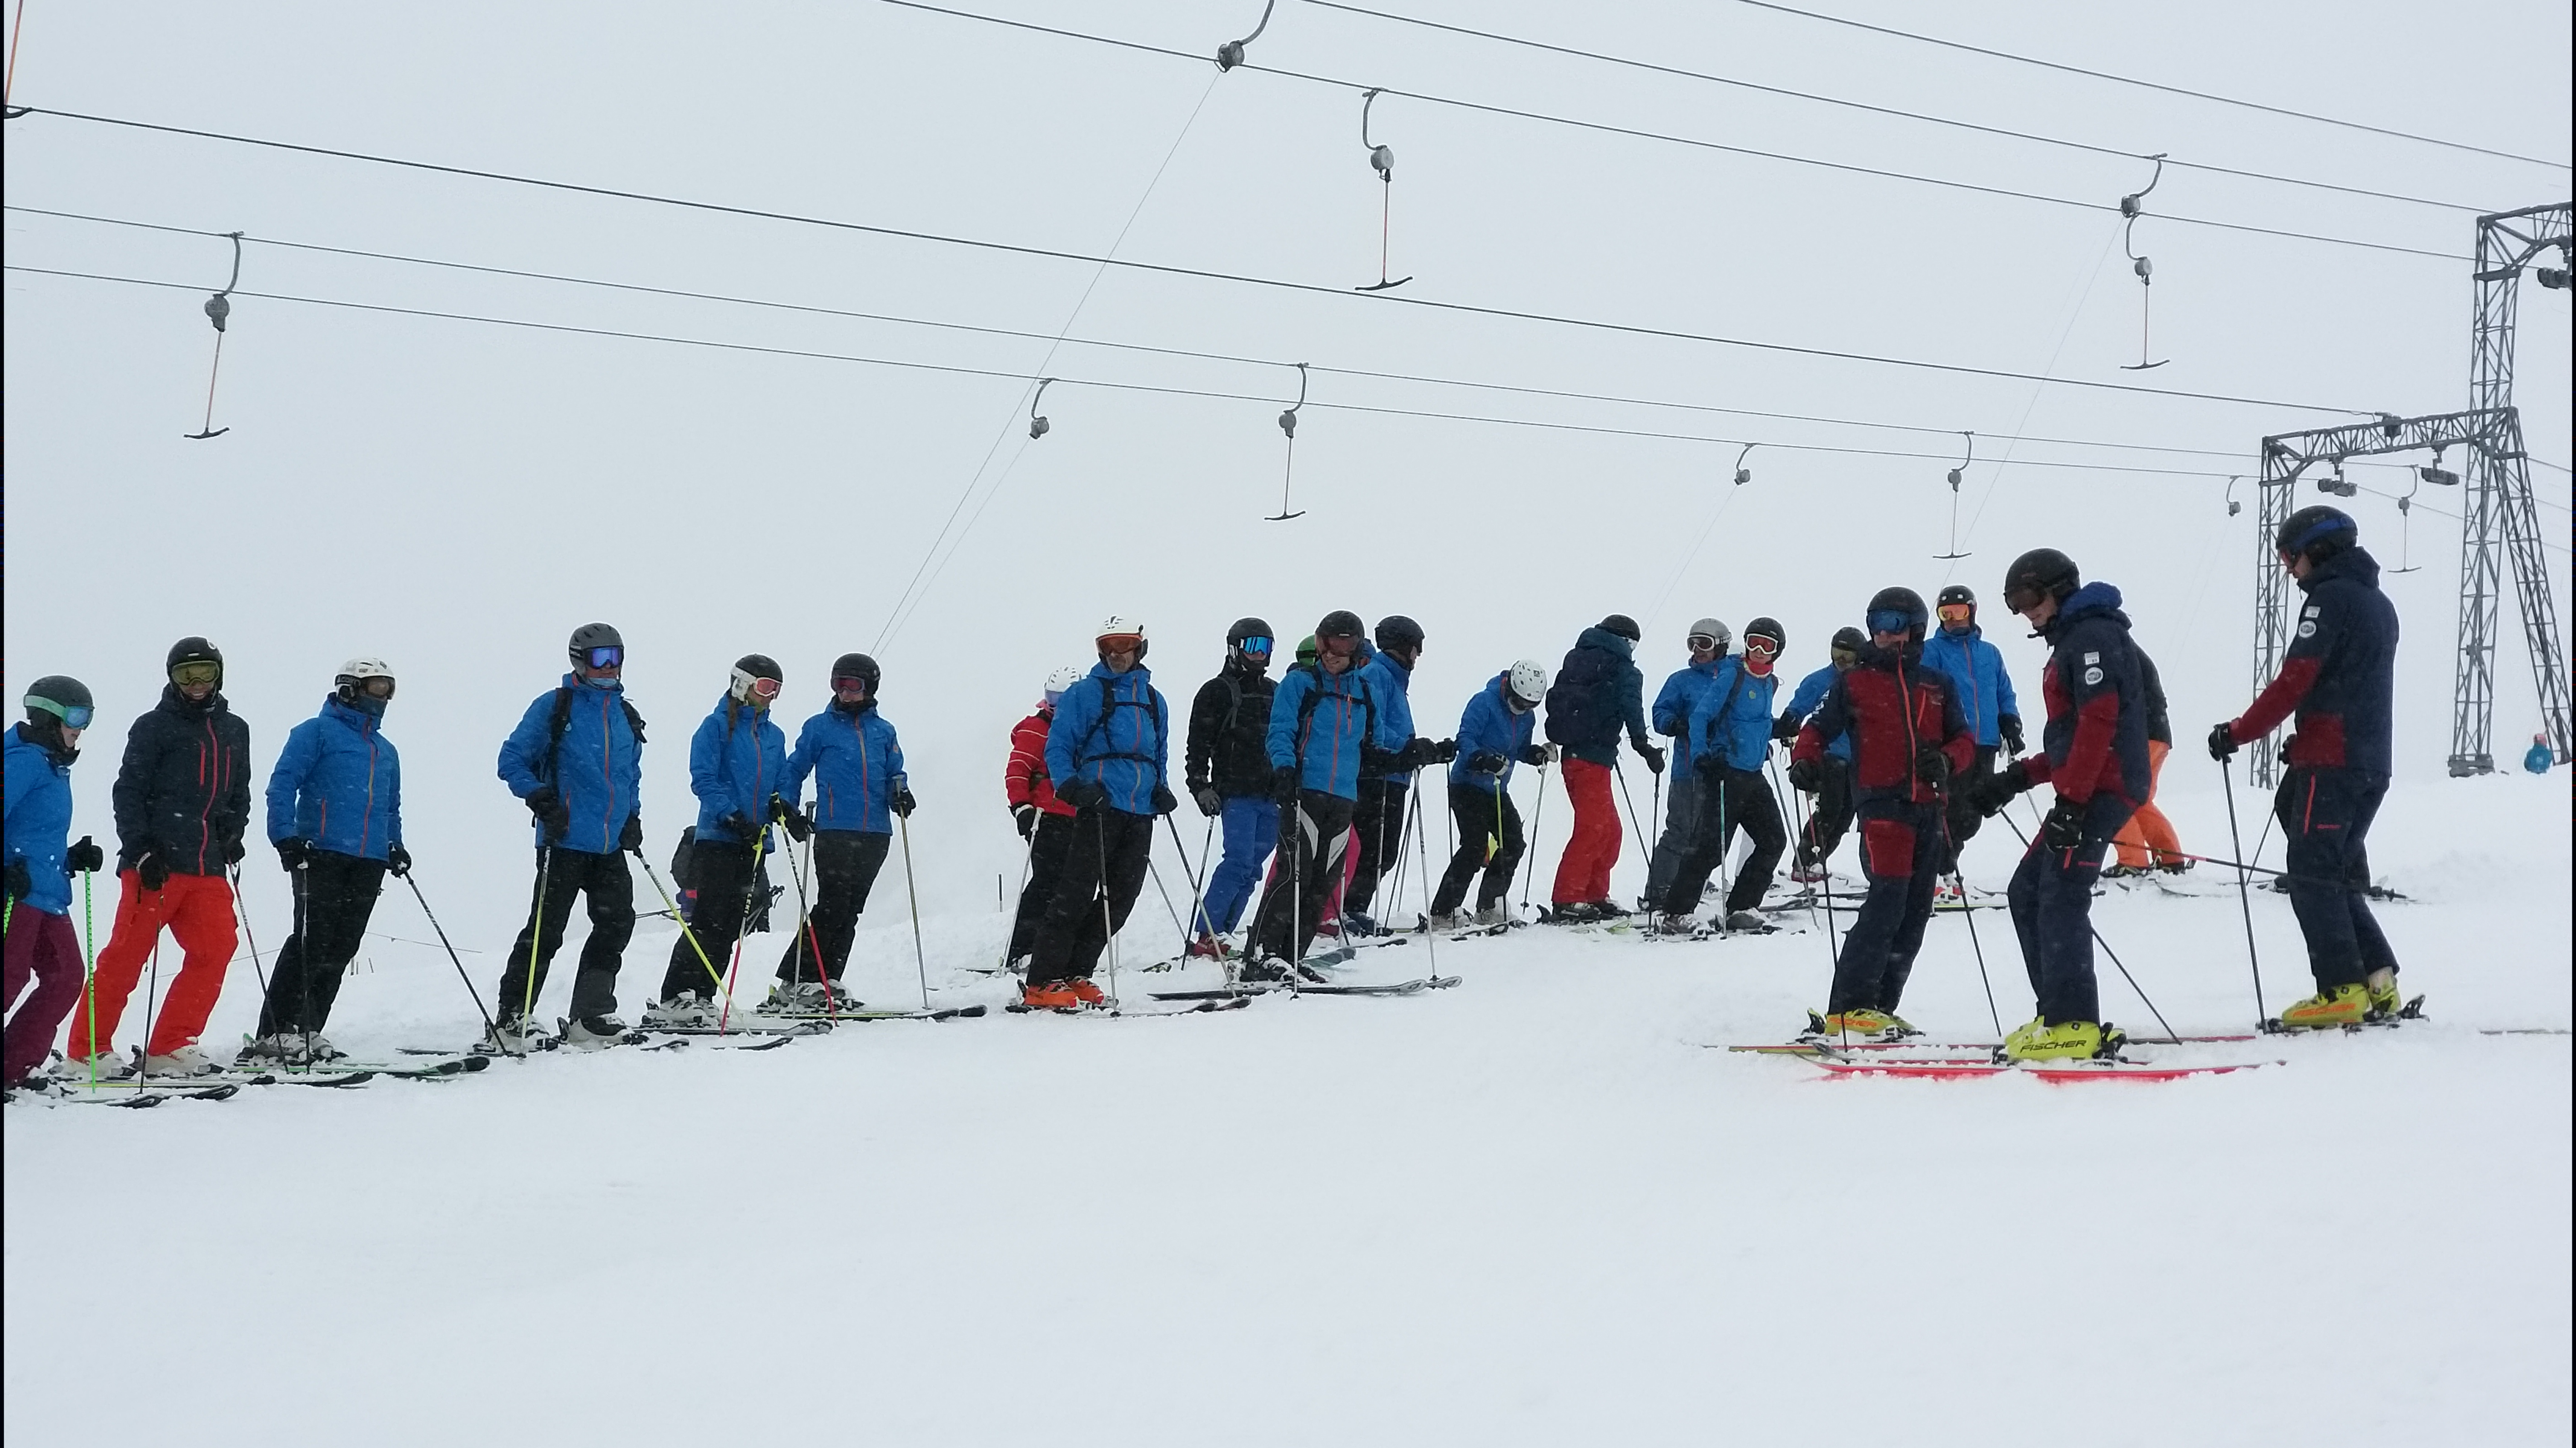 VOS Travel - Opleiding/training ski